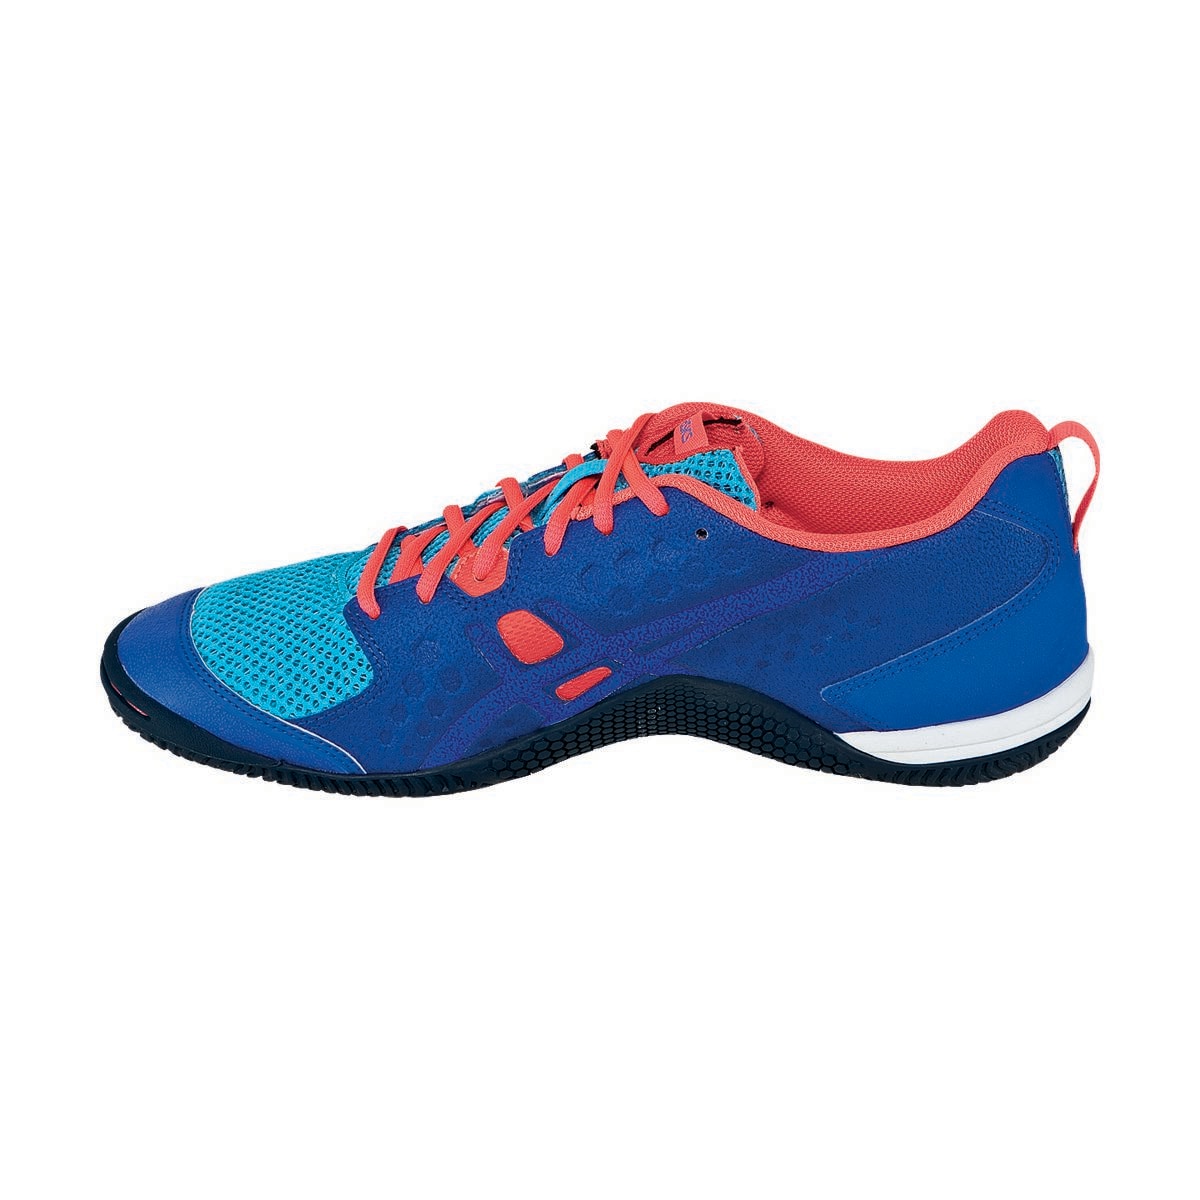 Asics Gel-Fortius TR Running Shoe - Women's - Footwear